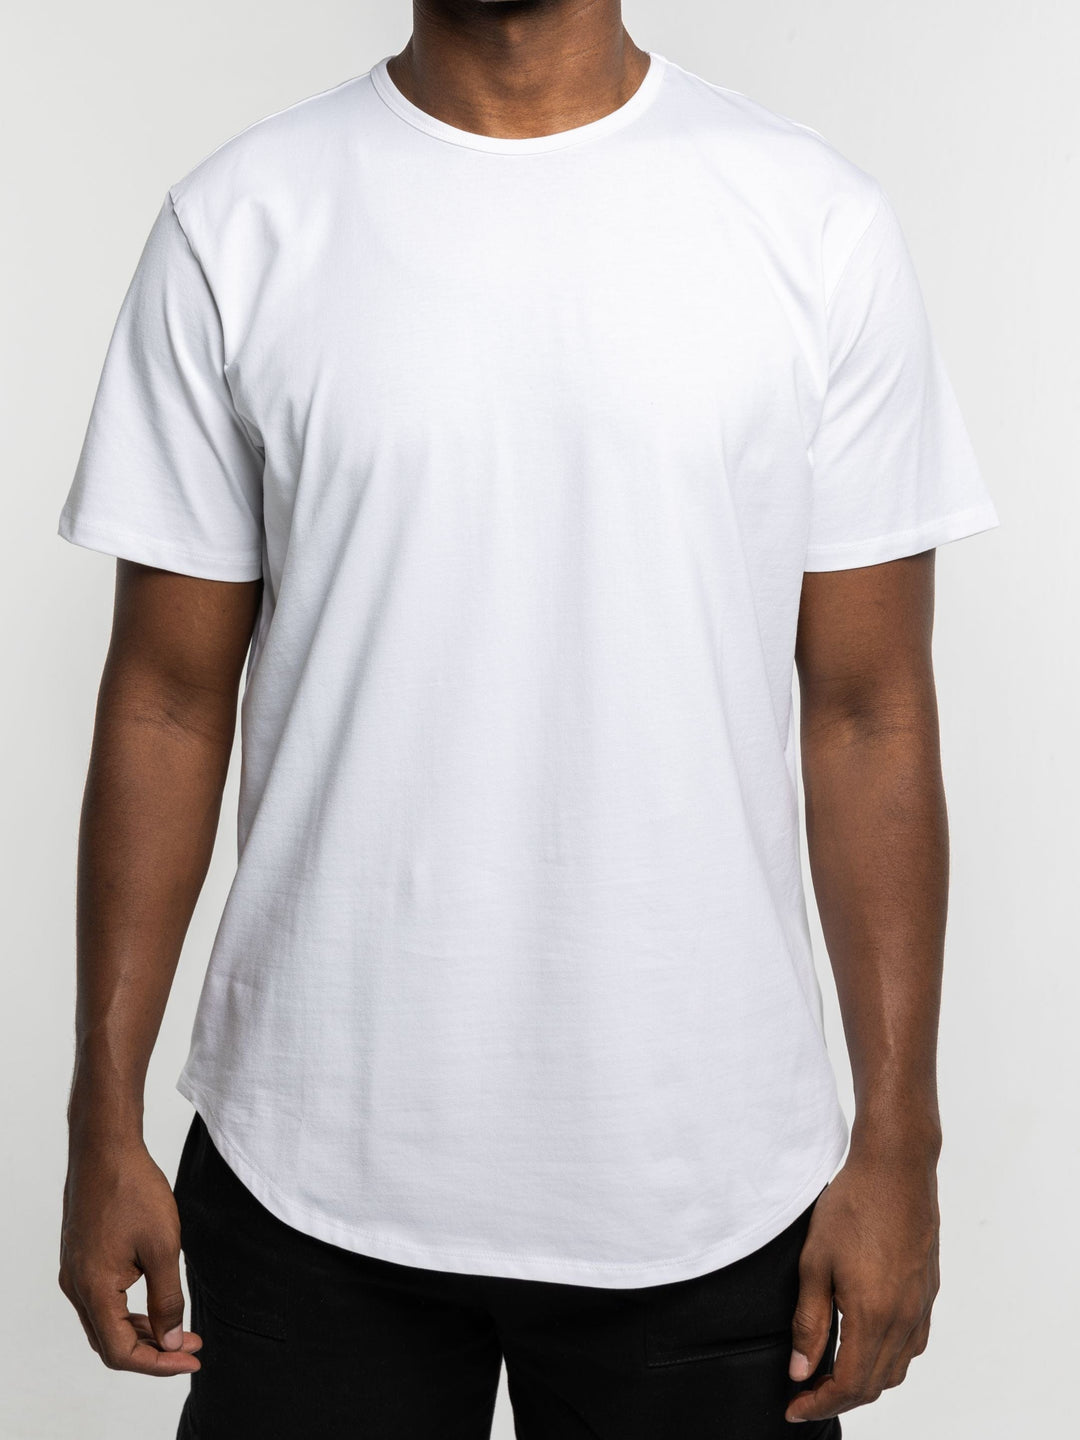 Zhivago x Nuuk Men T-shirt White Curved Hem T-Shirt: SLS Comfort